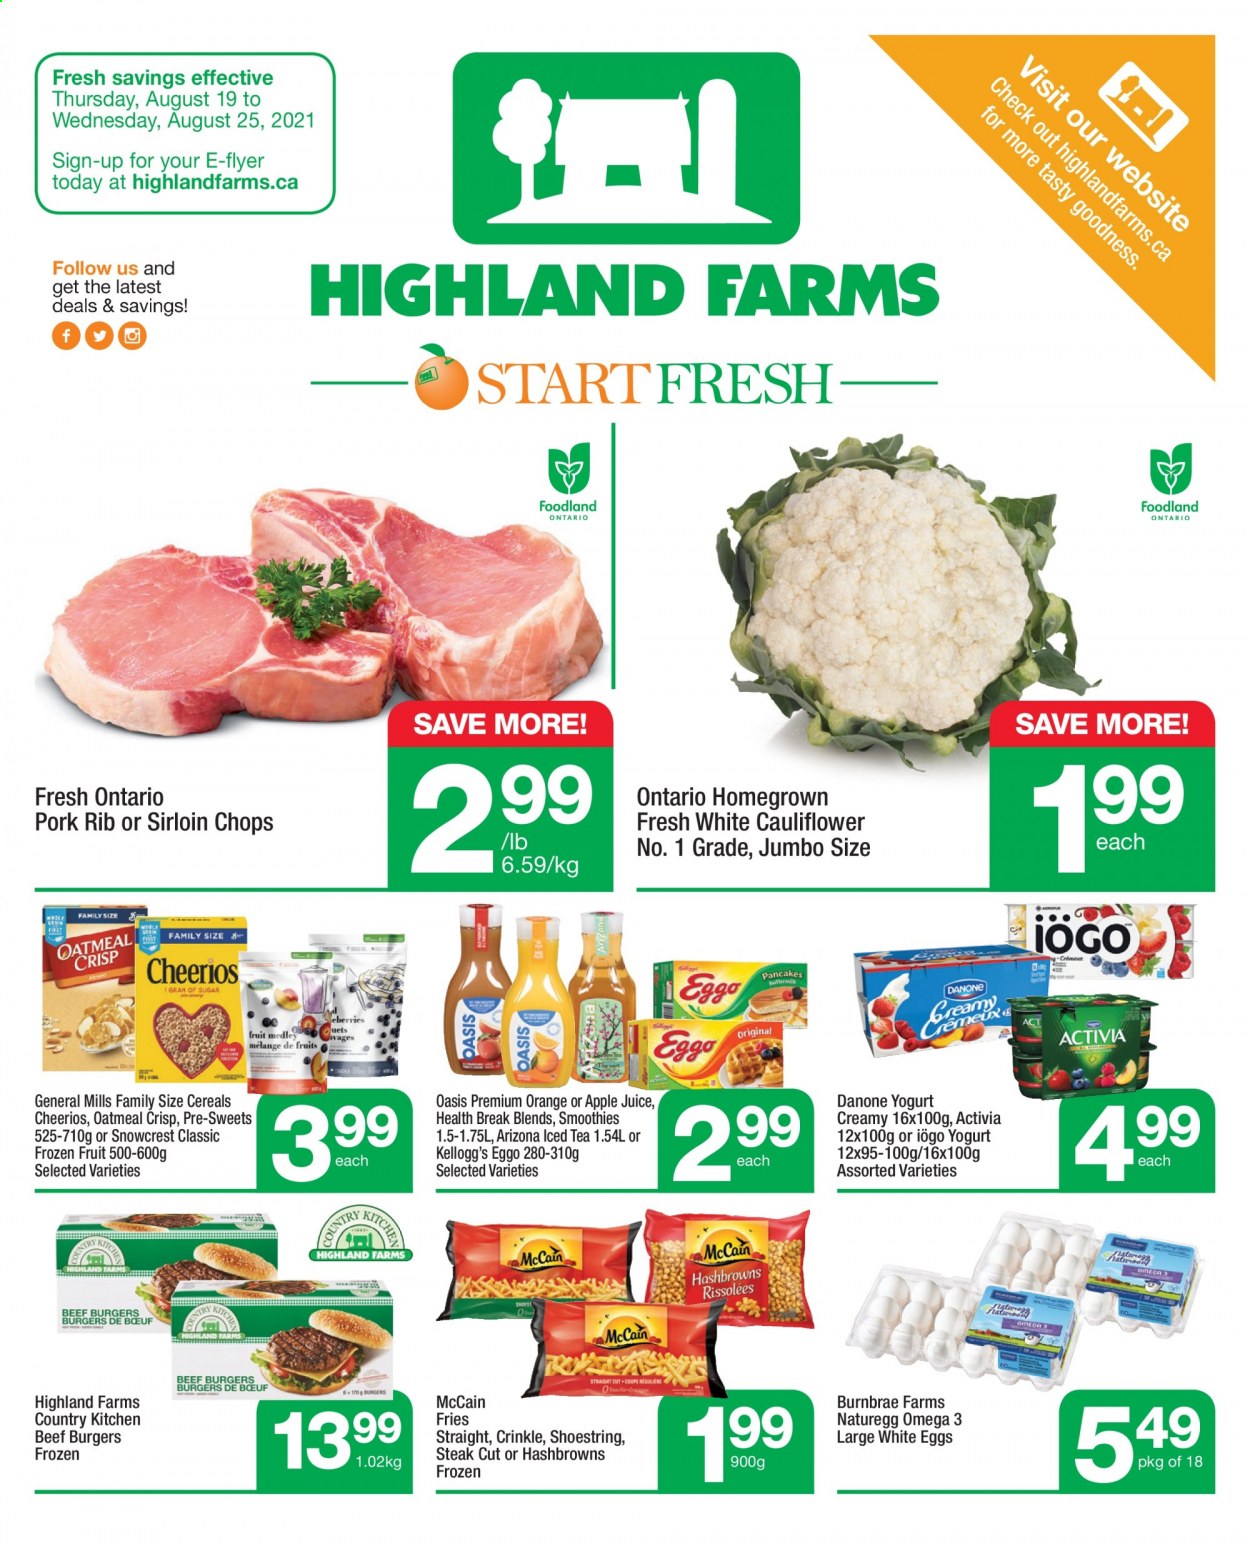 thumbnail - Circulaire Highland Farms - 19 Août 2021 - 25 Août 2021 - Produits soldés - Danone, Oasis, McCain, Activia, Kellogg's, steak. Page 1.